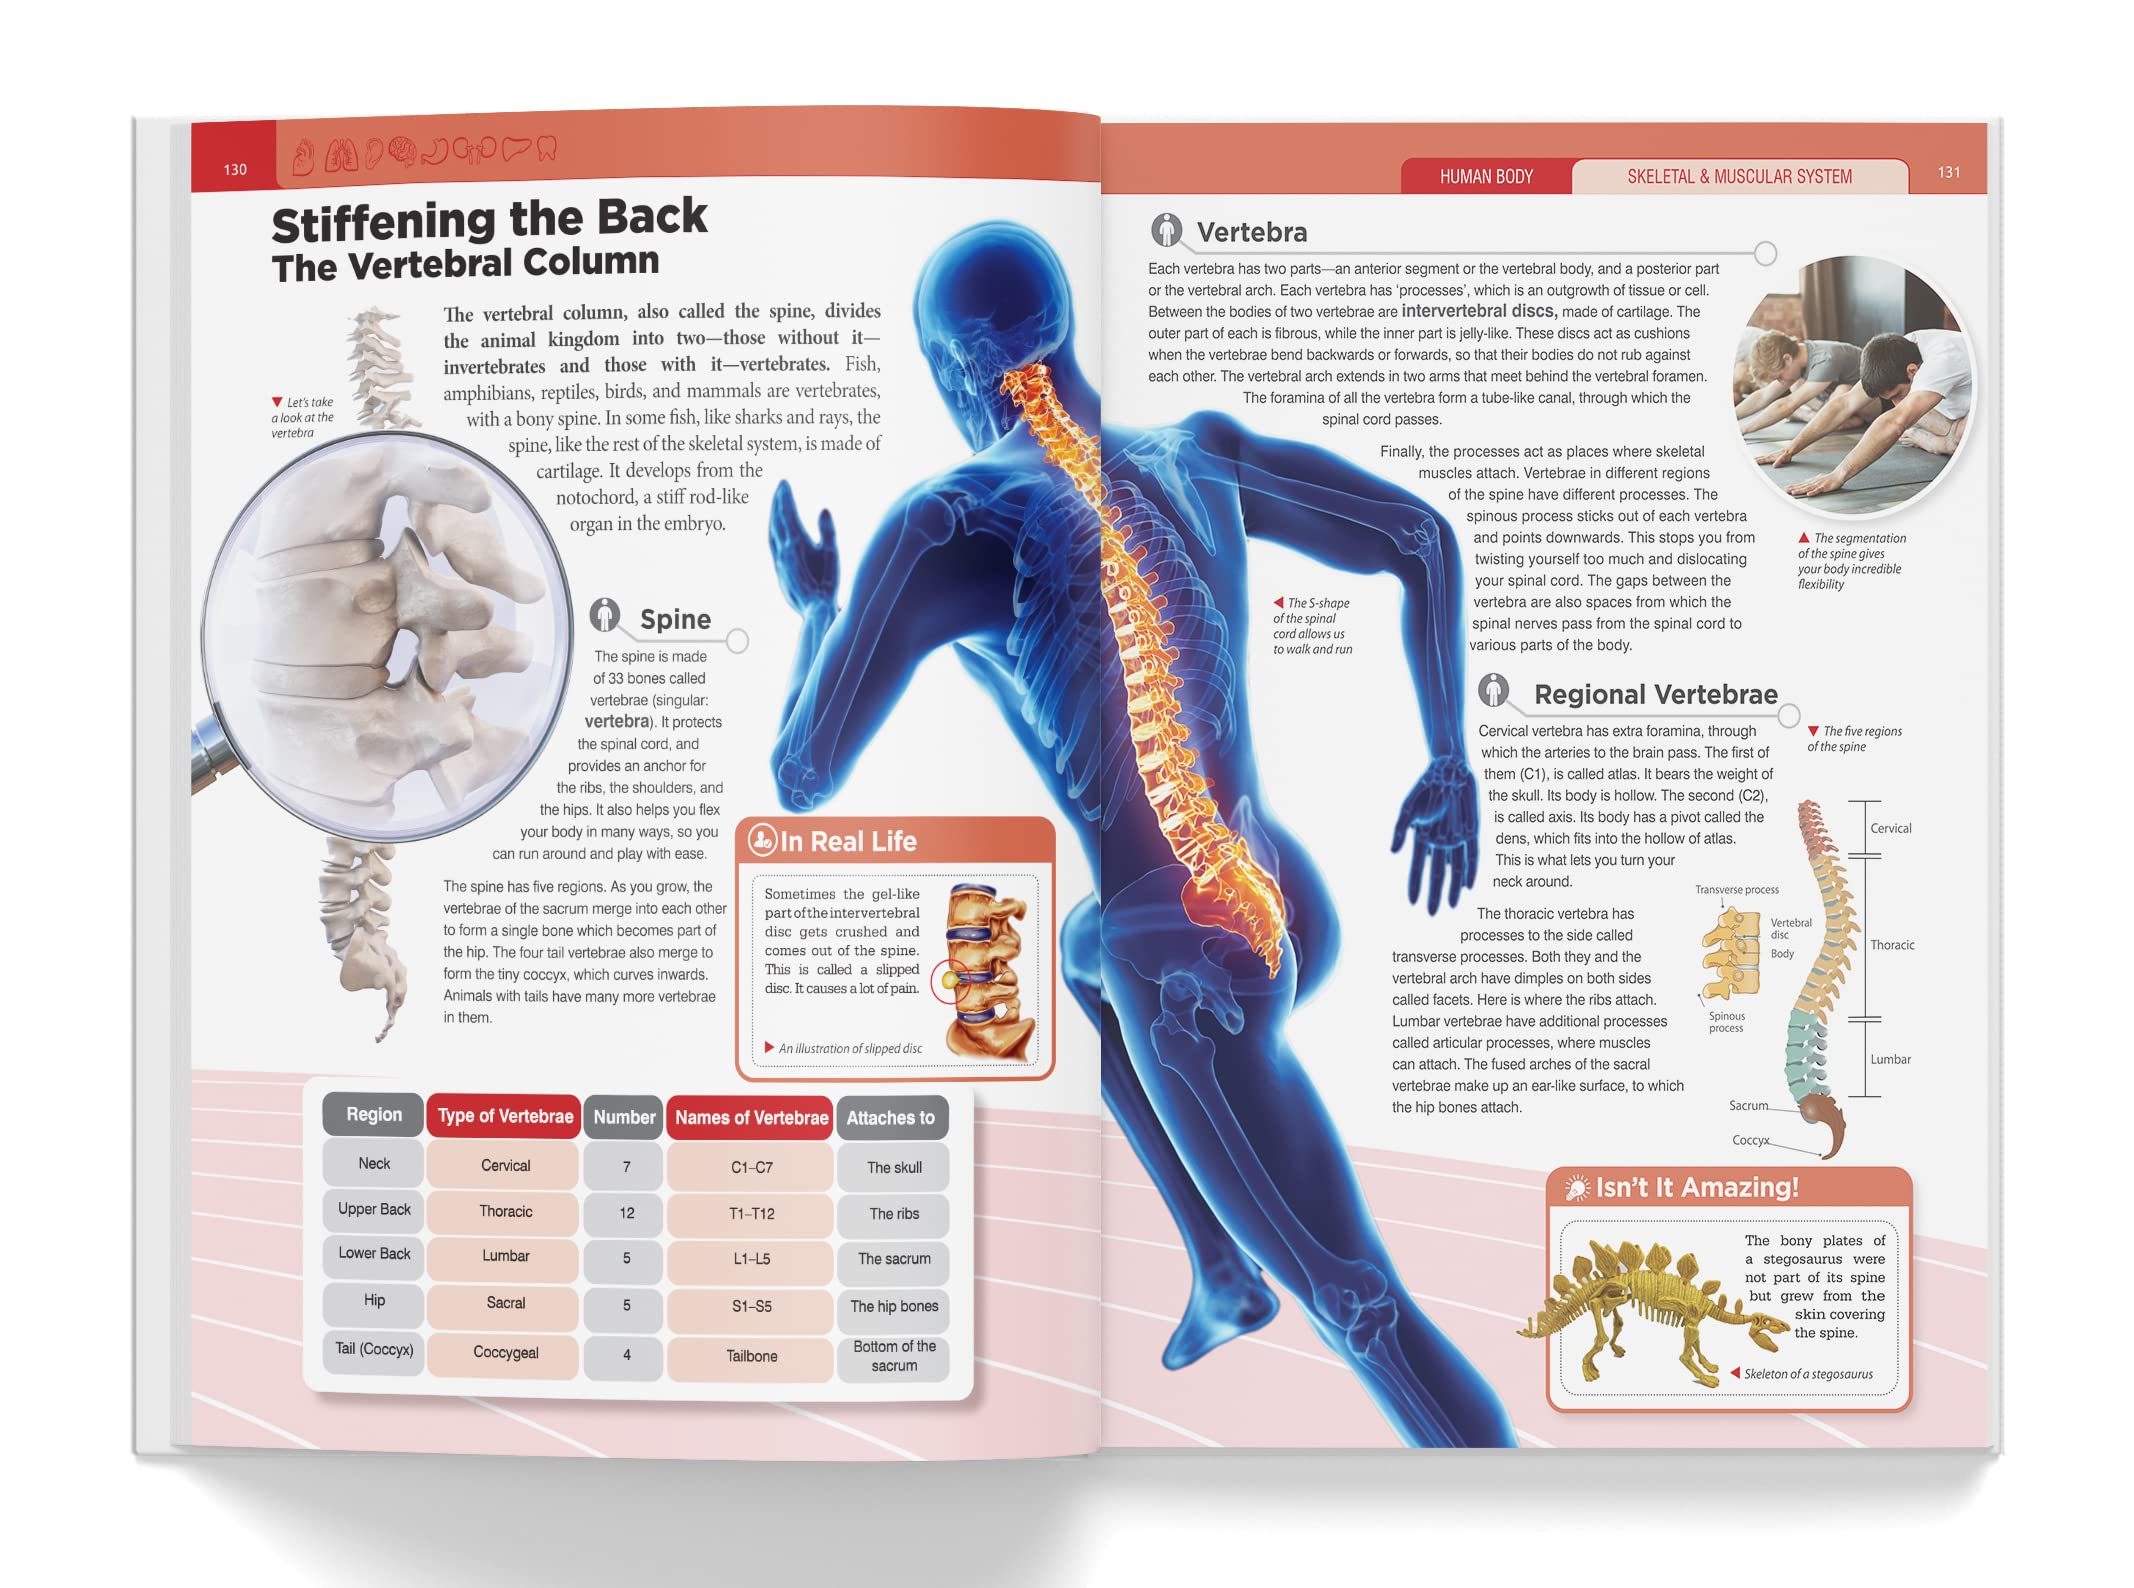 Knowledge Encyclopedia: Human Body (Knowledge Encyclopedia For Children)